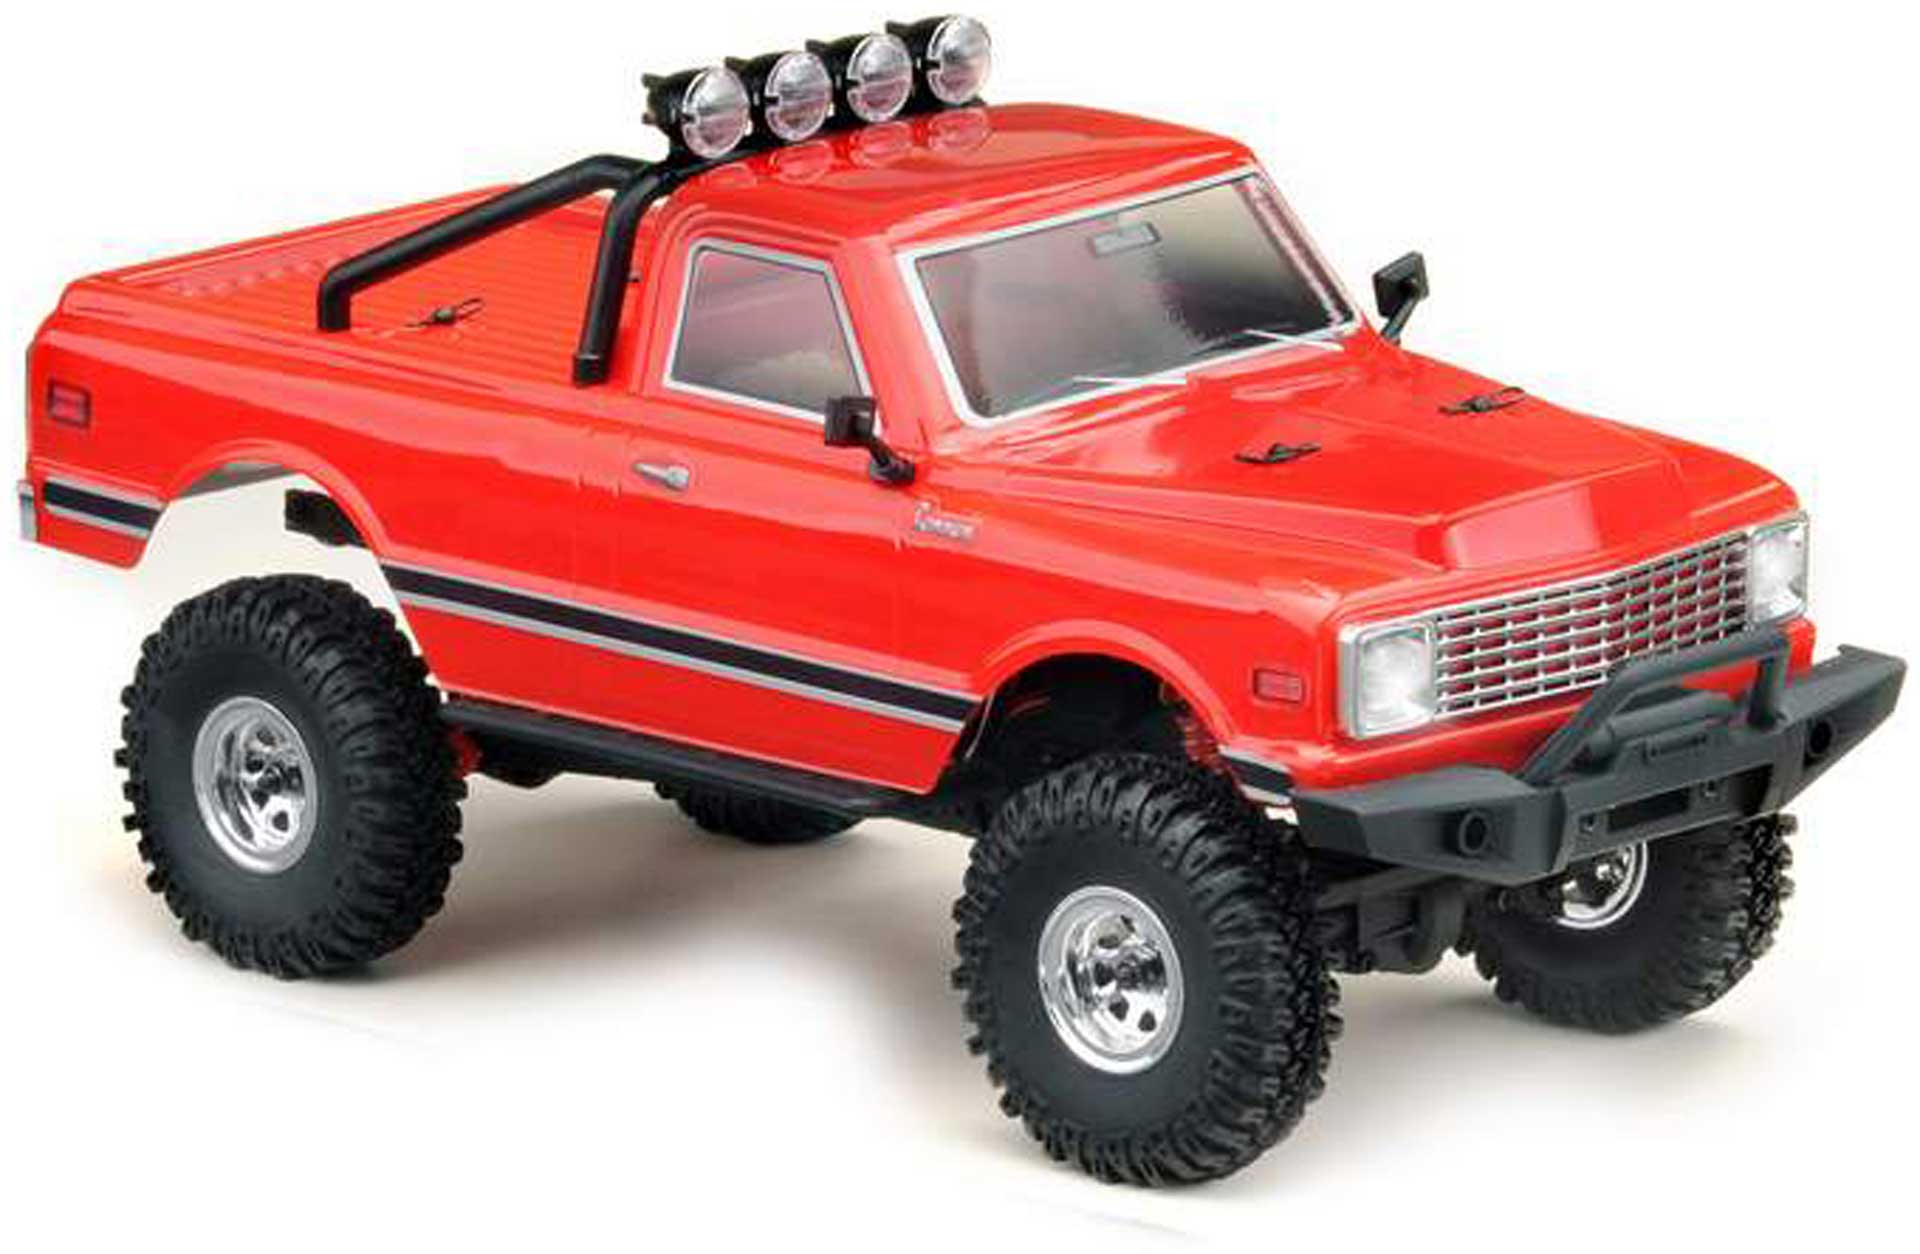 ABSIMA 1:18 Mini Crawler "C10 Pickup" red RTR